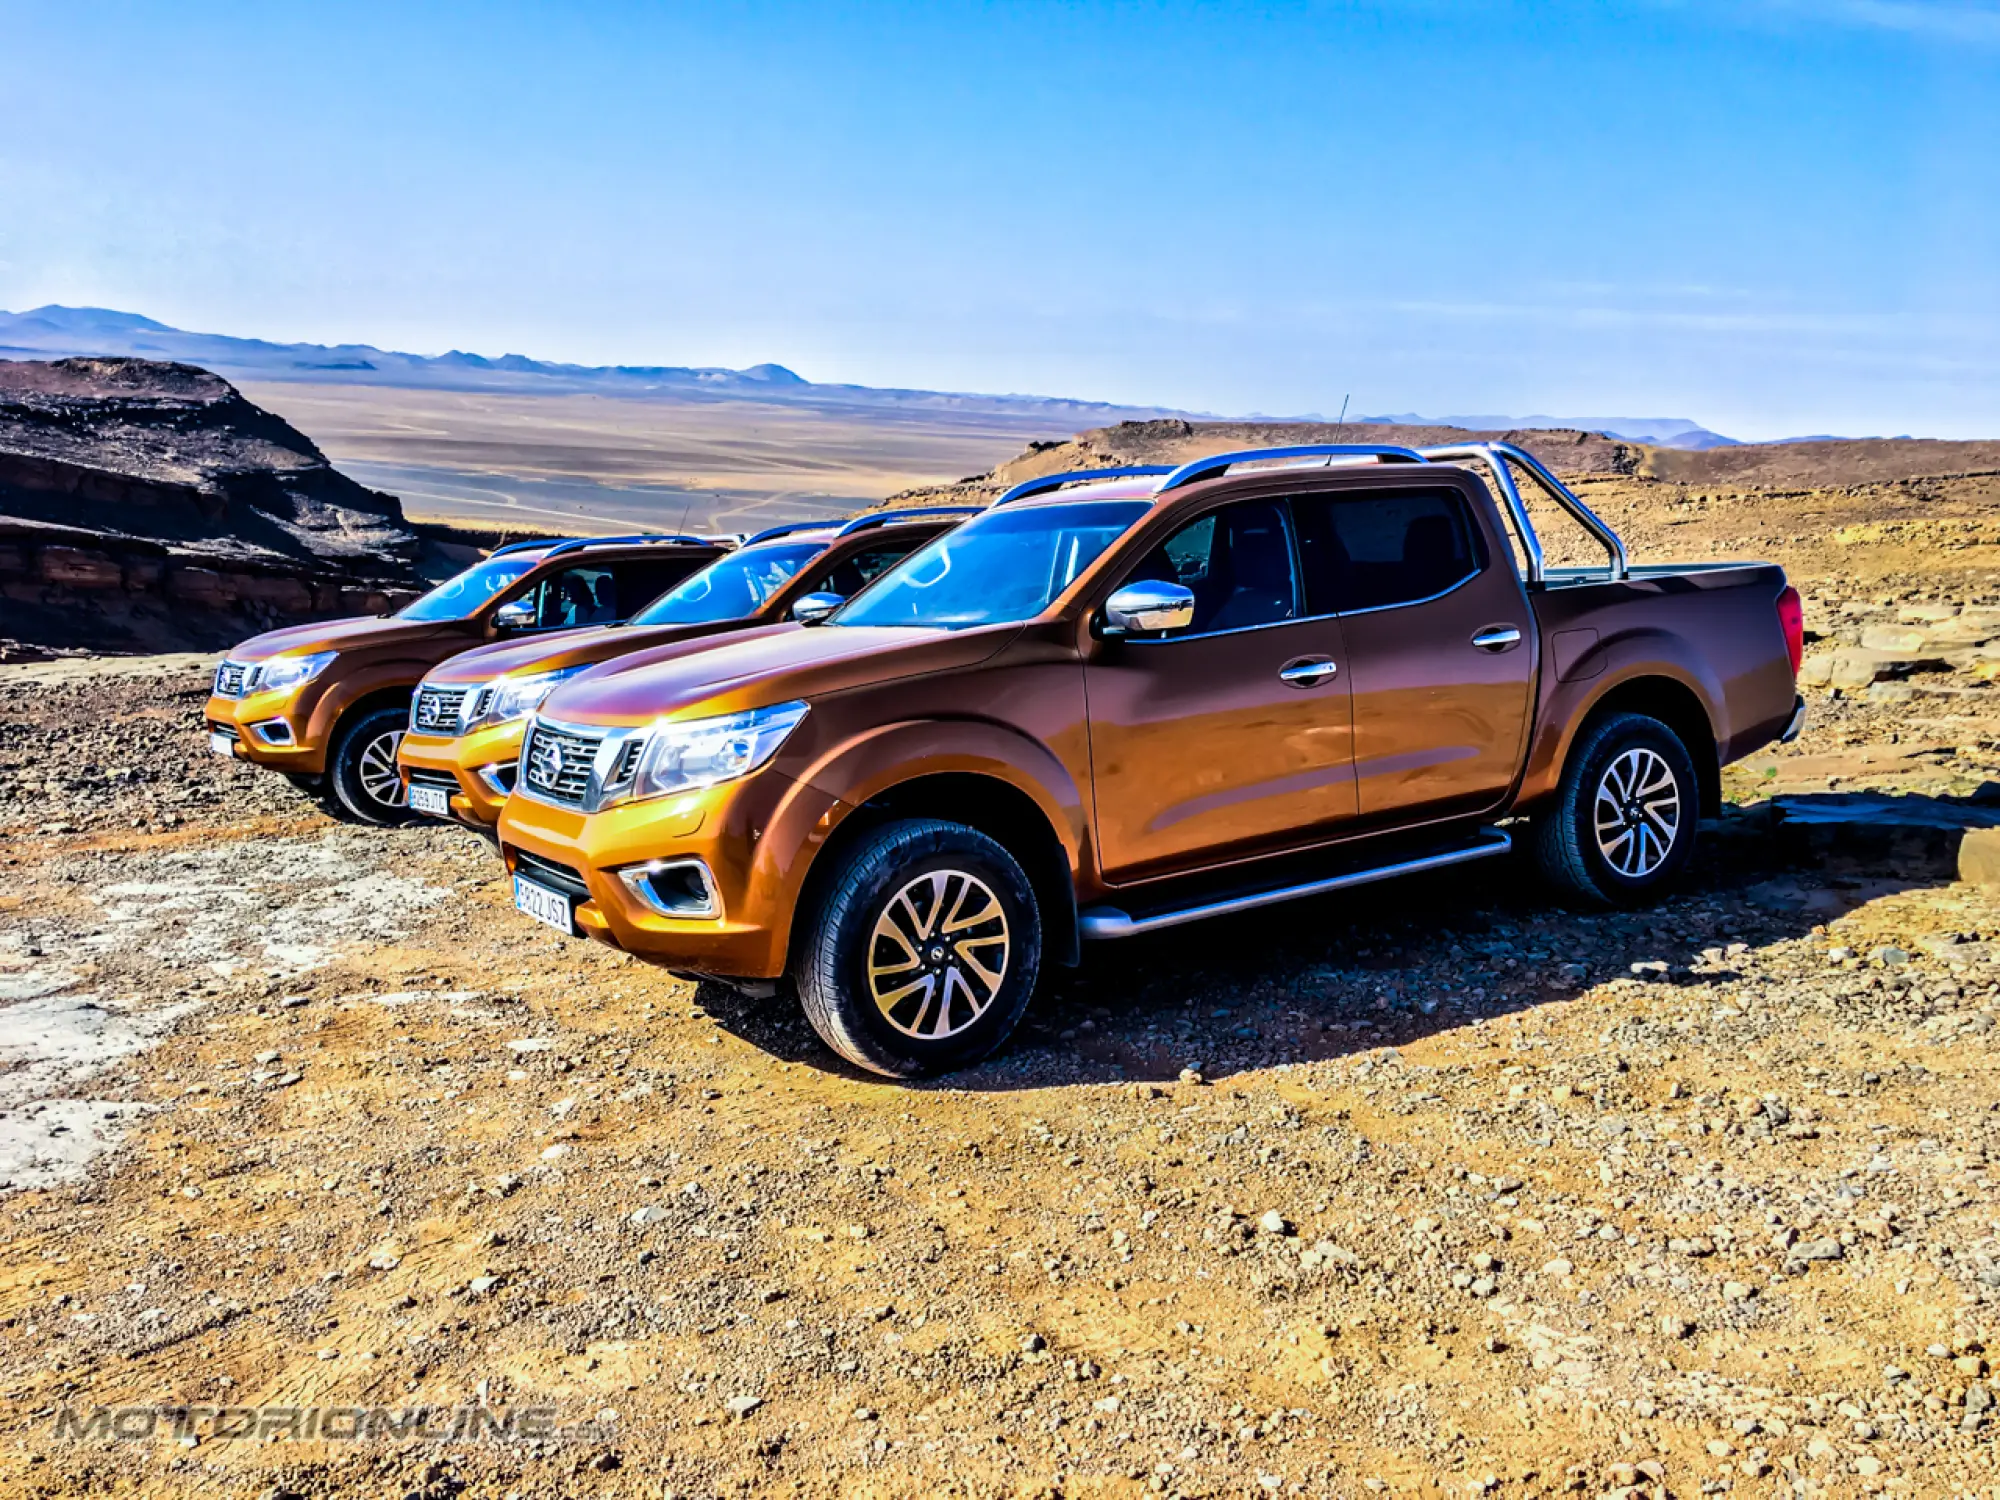 Nissan Navara MY 2016 - Sfida alle Dune del Sahara - 41